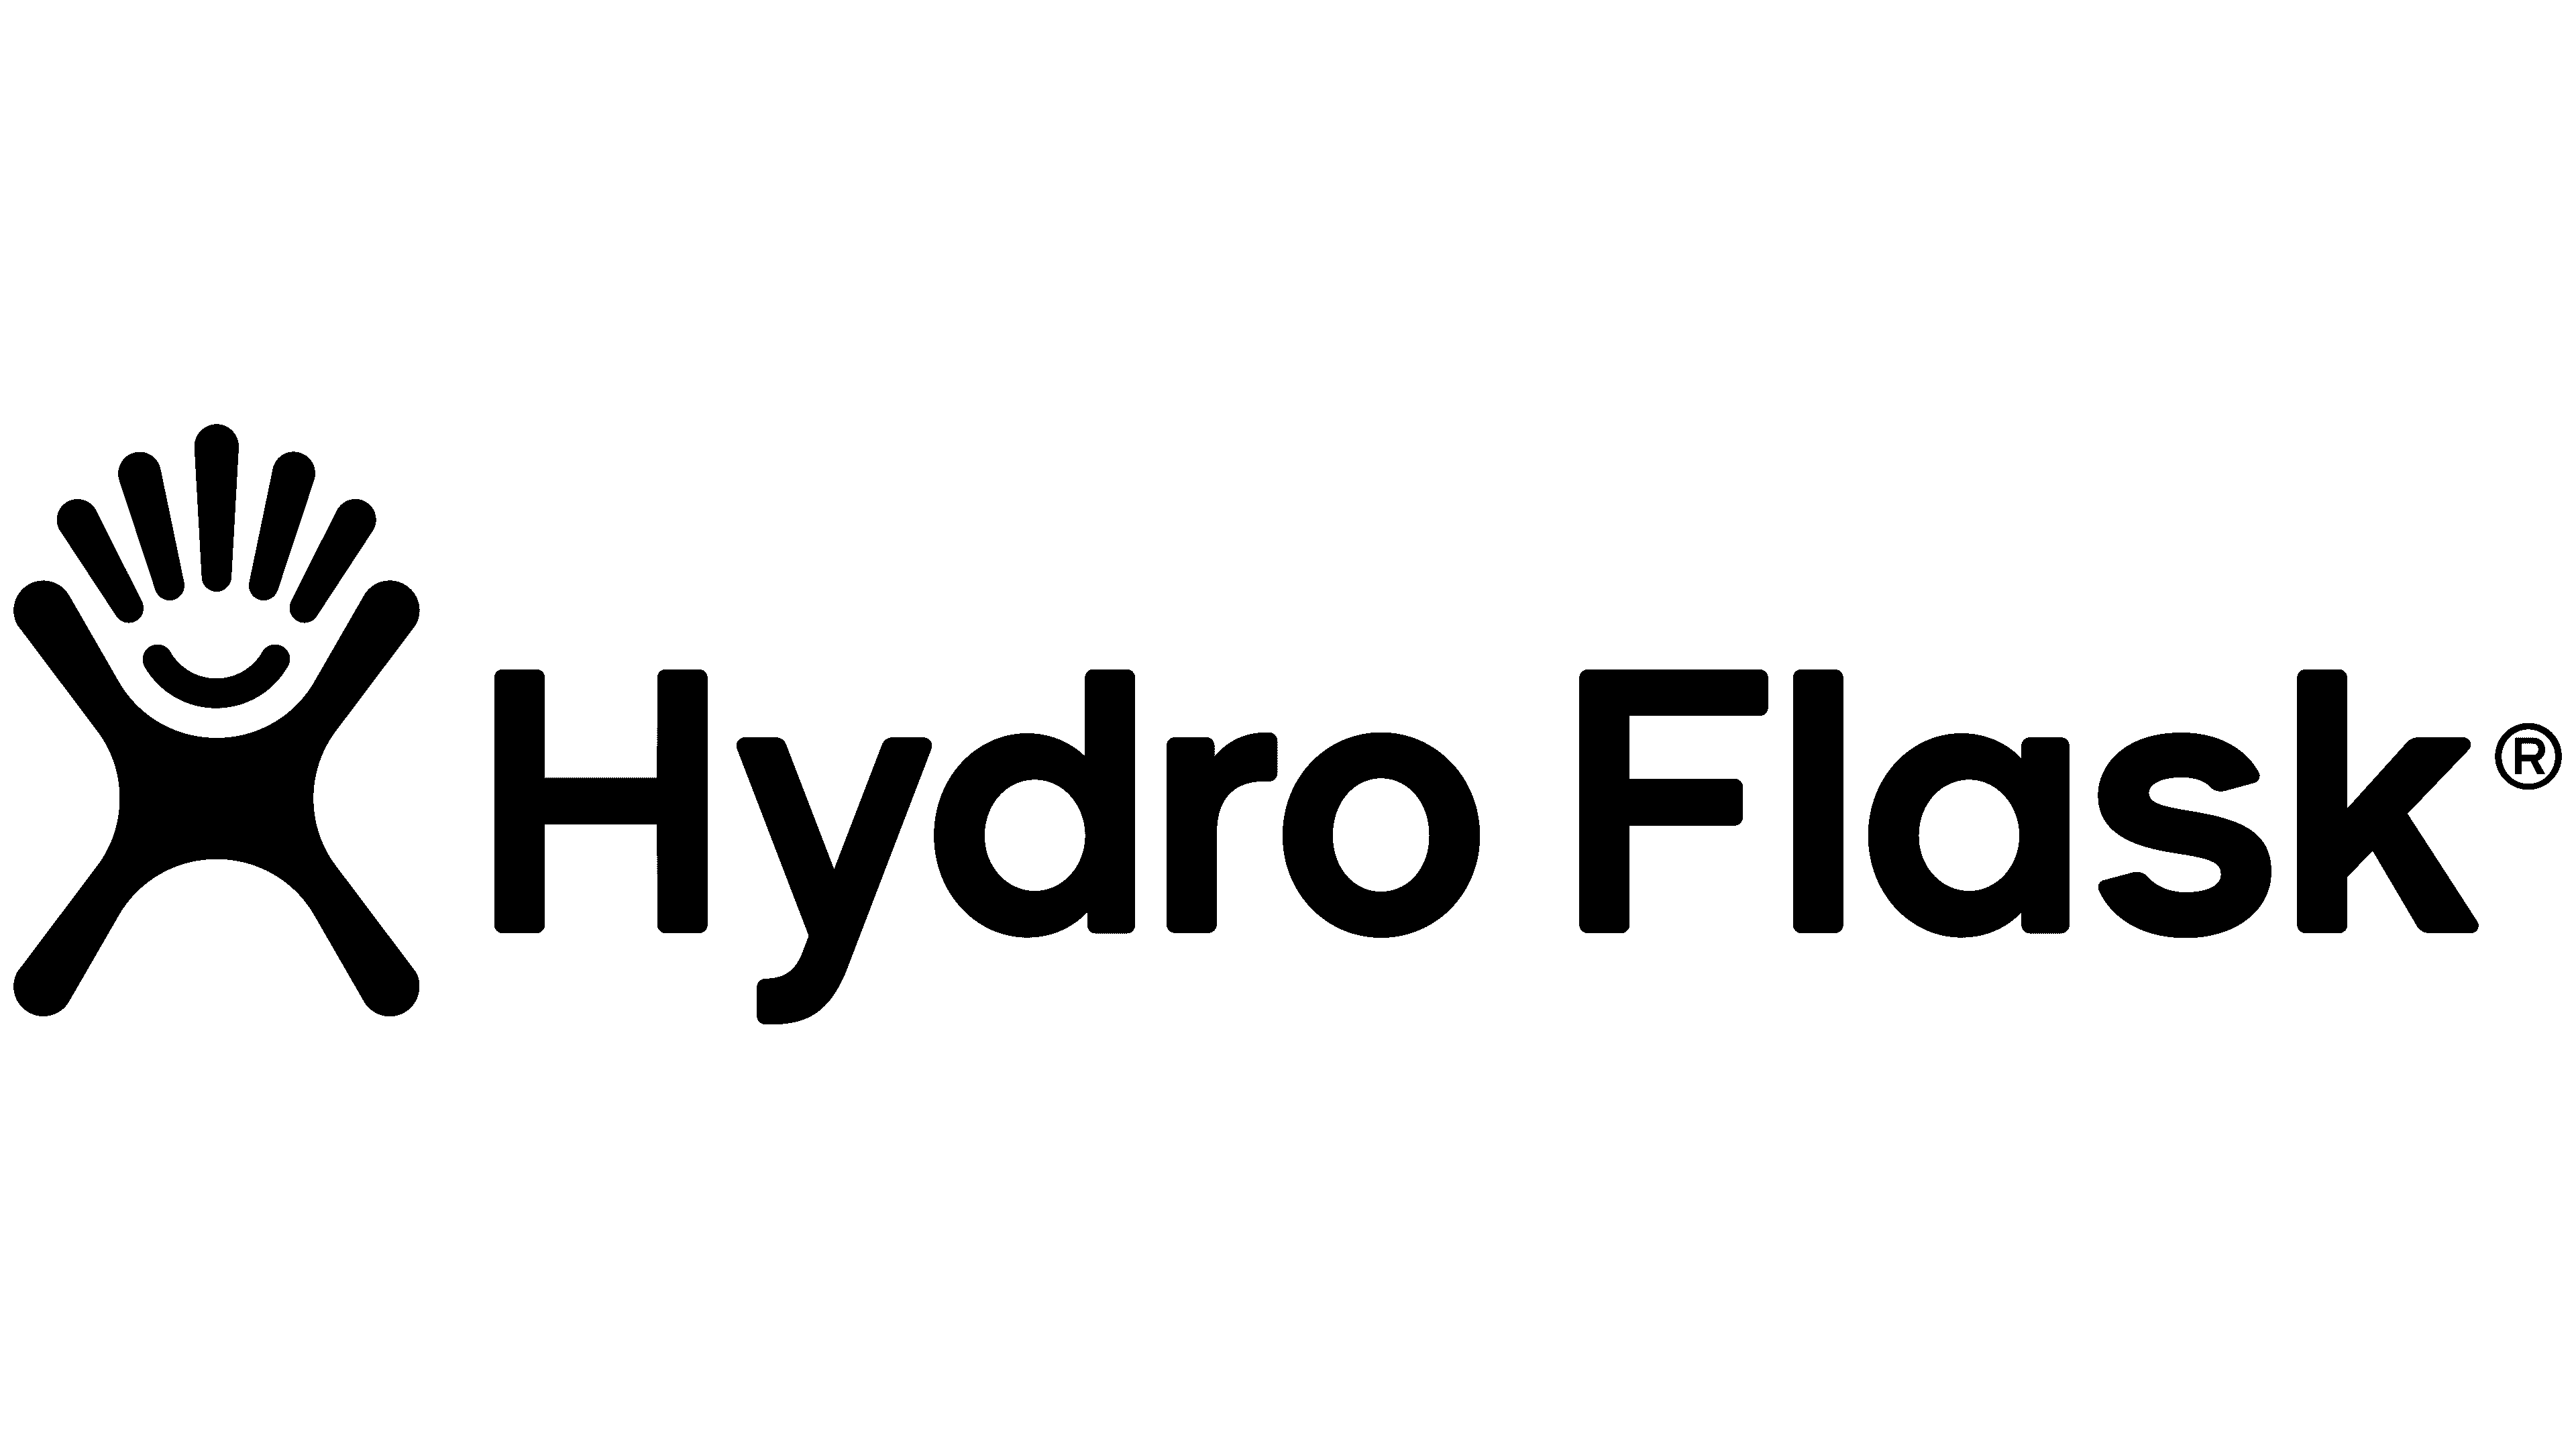 hydro flask logo